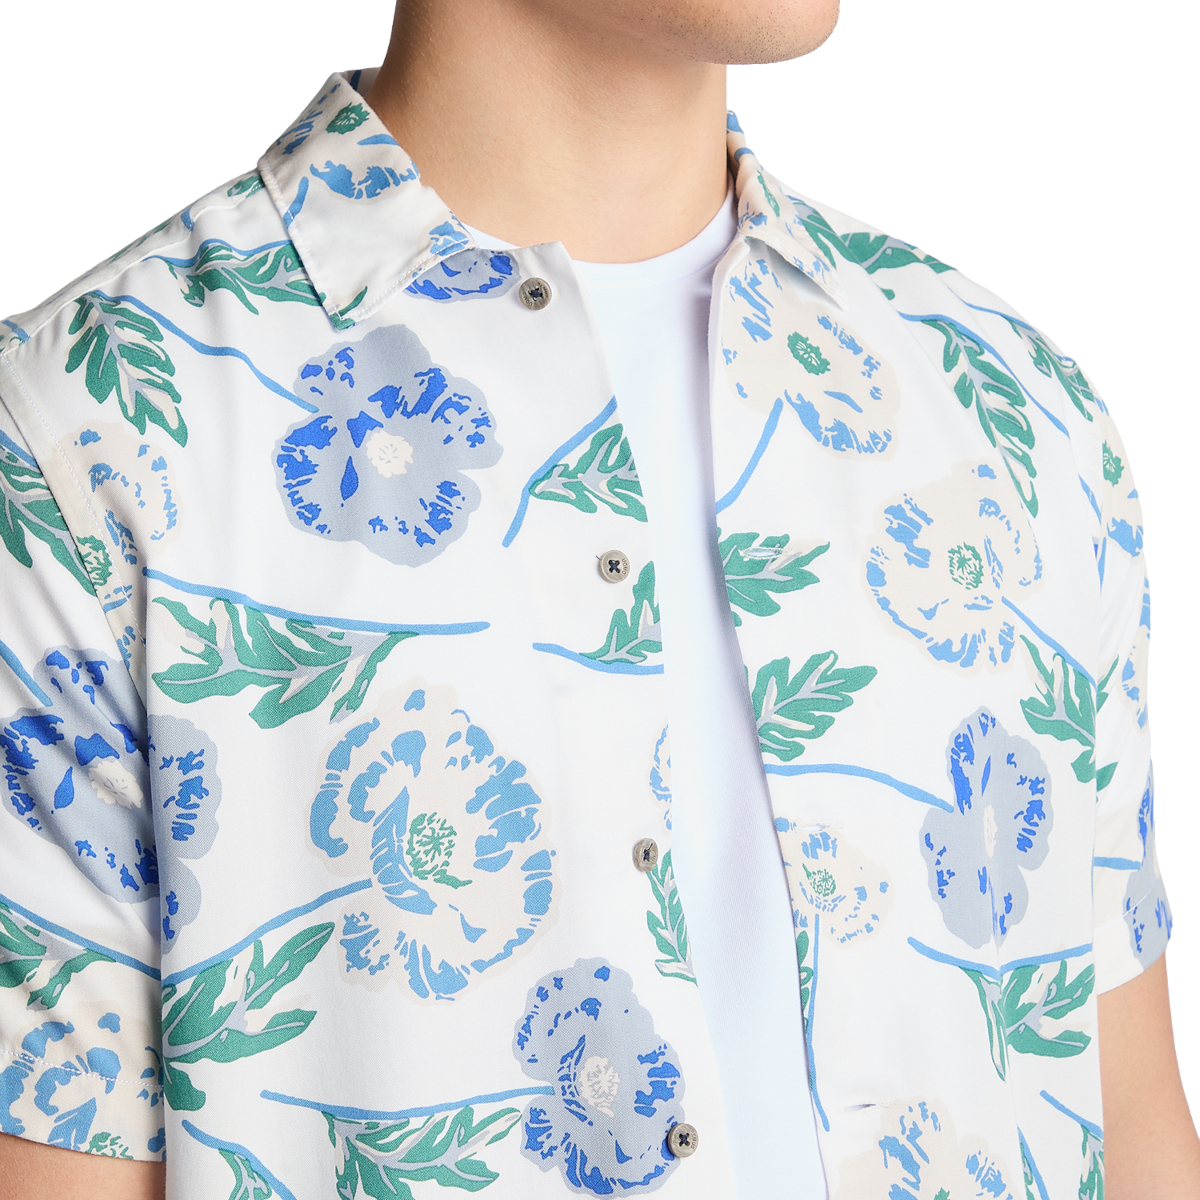 Remus Uomo  Floral Print Shirt 13924SS 12 Blue